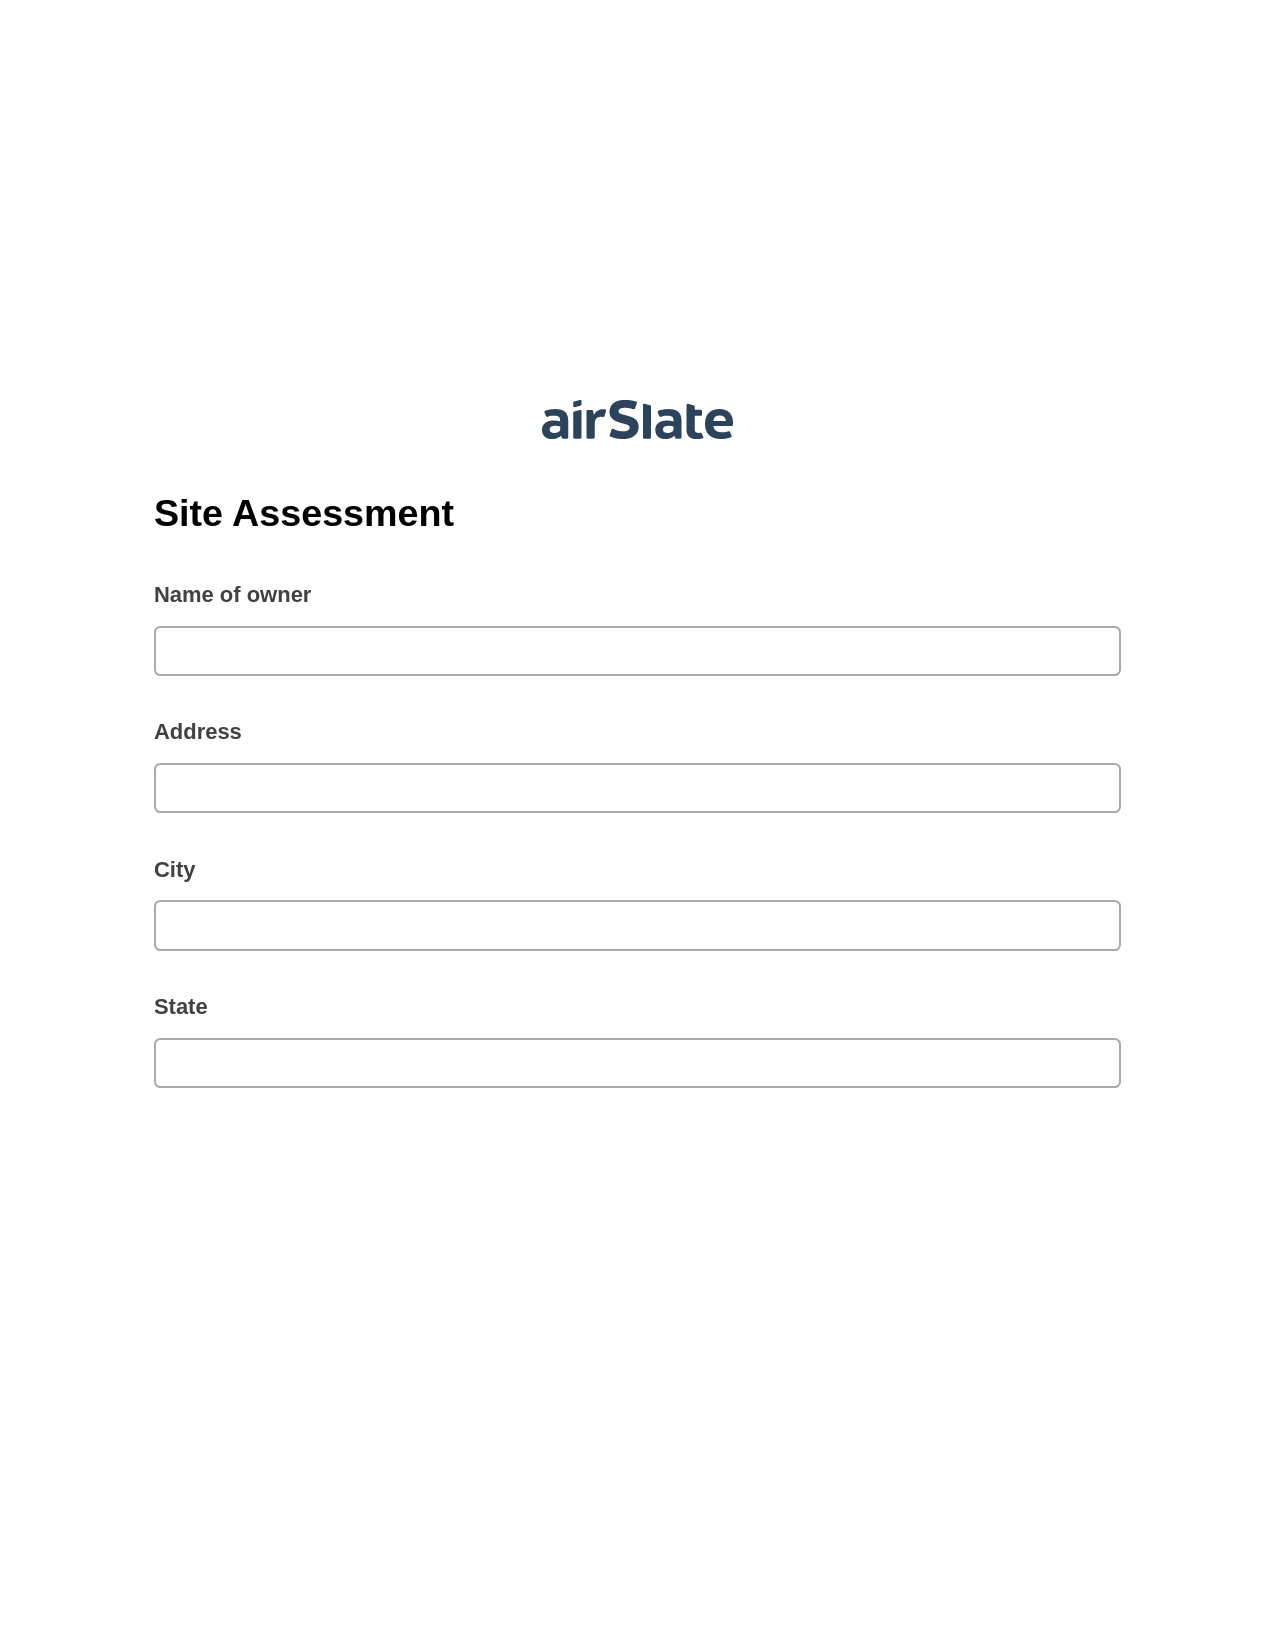 Multirole Site Assessment Pre-fill from Excel Spreadsheet Bot, Document Hide Bot, Google Drive Bot